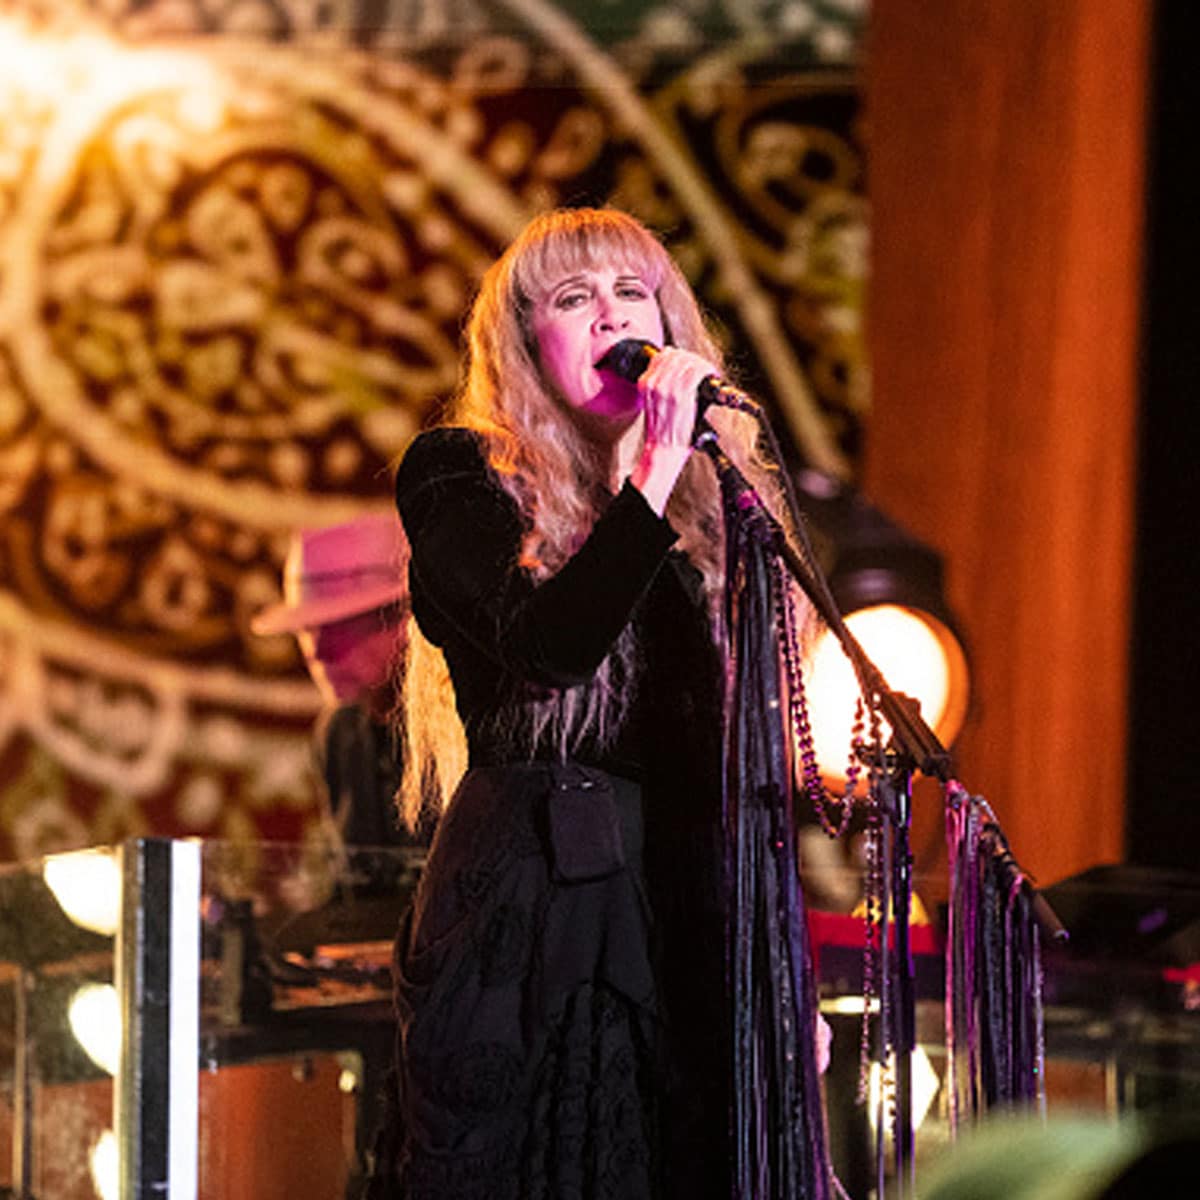 Stevie Nicks performs during 2022 Bonnaroo Music & Arts Festival